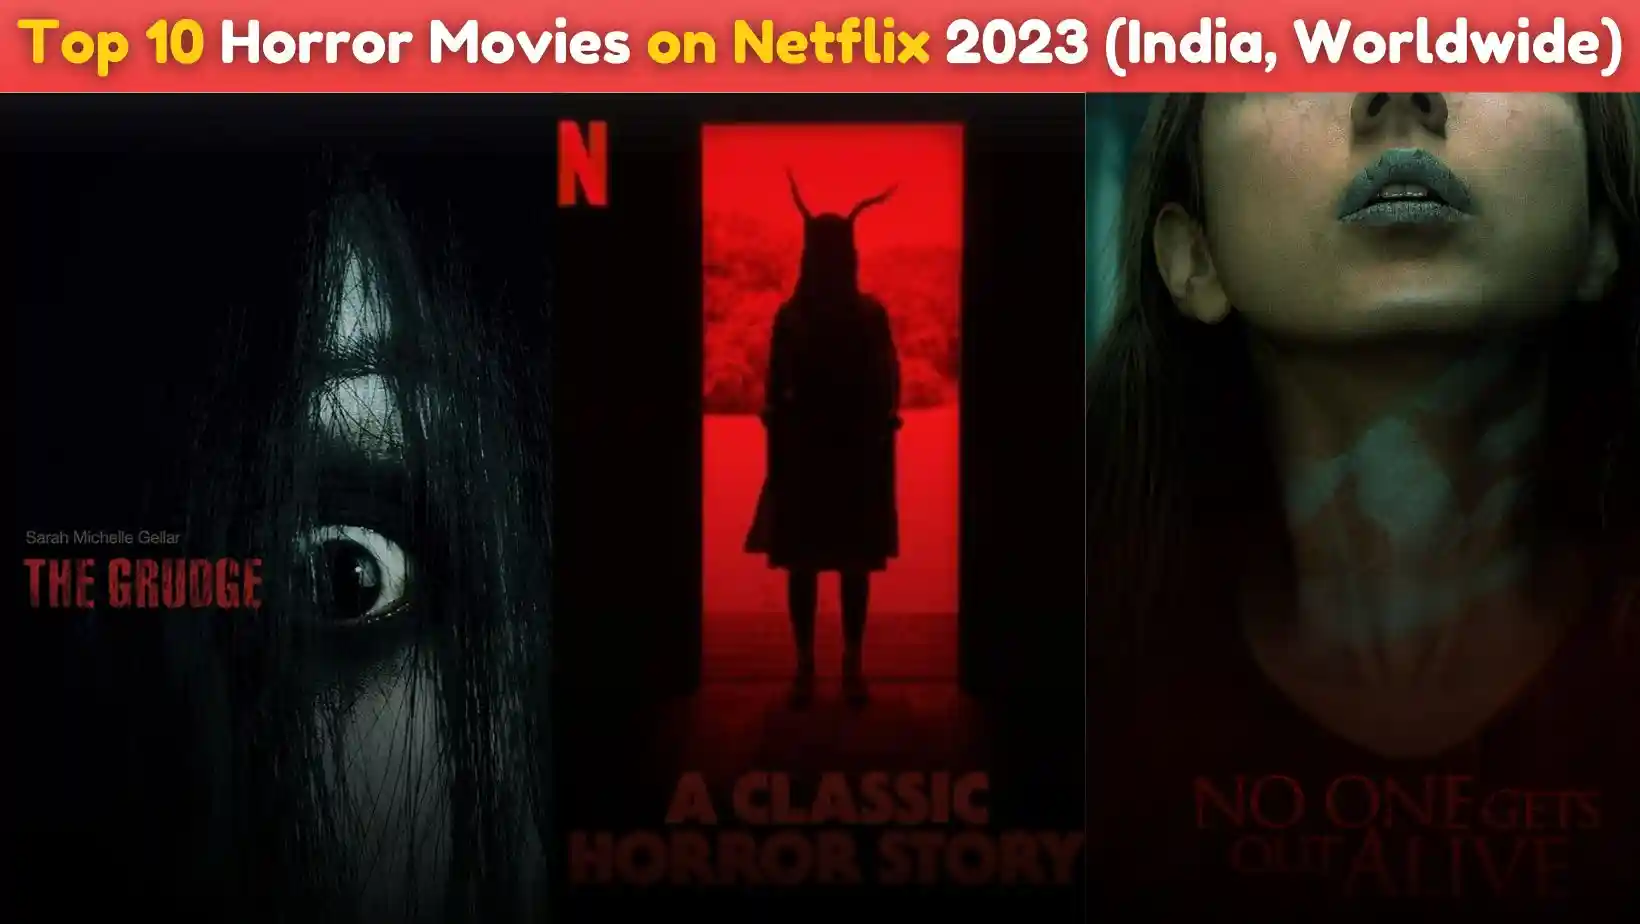 Top 10 Horror Movies on Netflix 2023 (India, Worldwide)